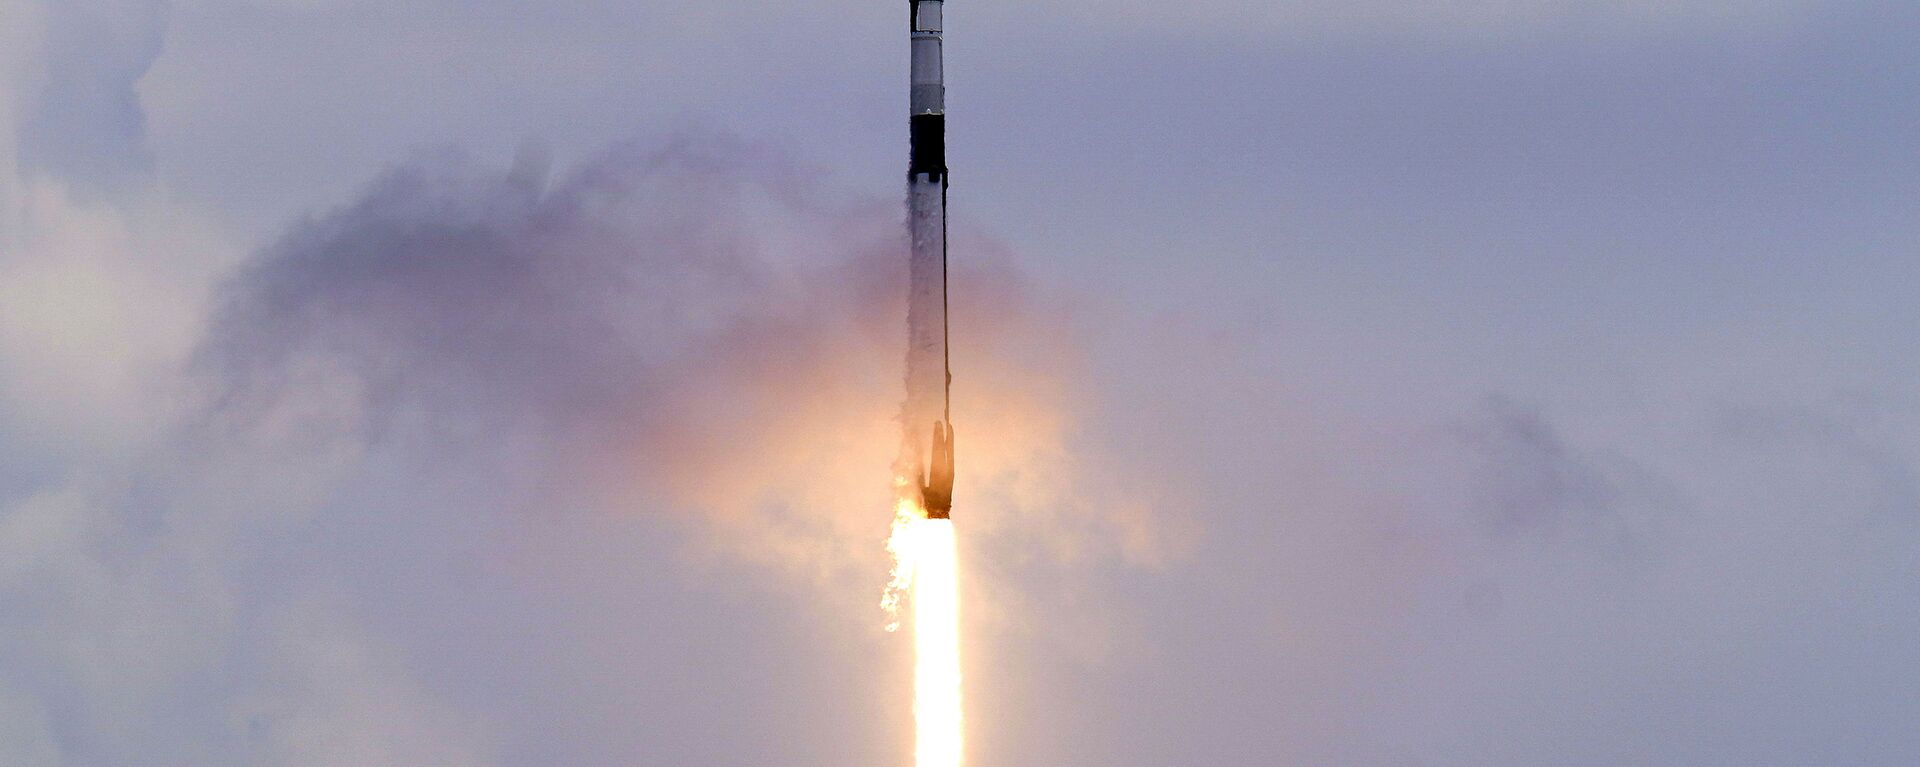 SpaceX's Falcon 9 Successfully Places SXM-8 Satellite Into Orbit - Sputnik International, 1920, 06.06.2021